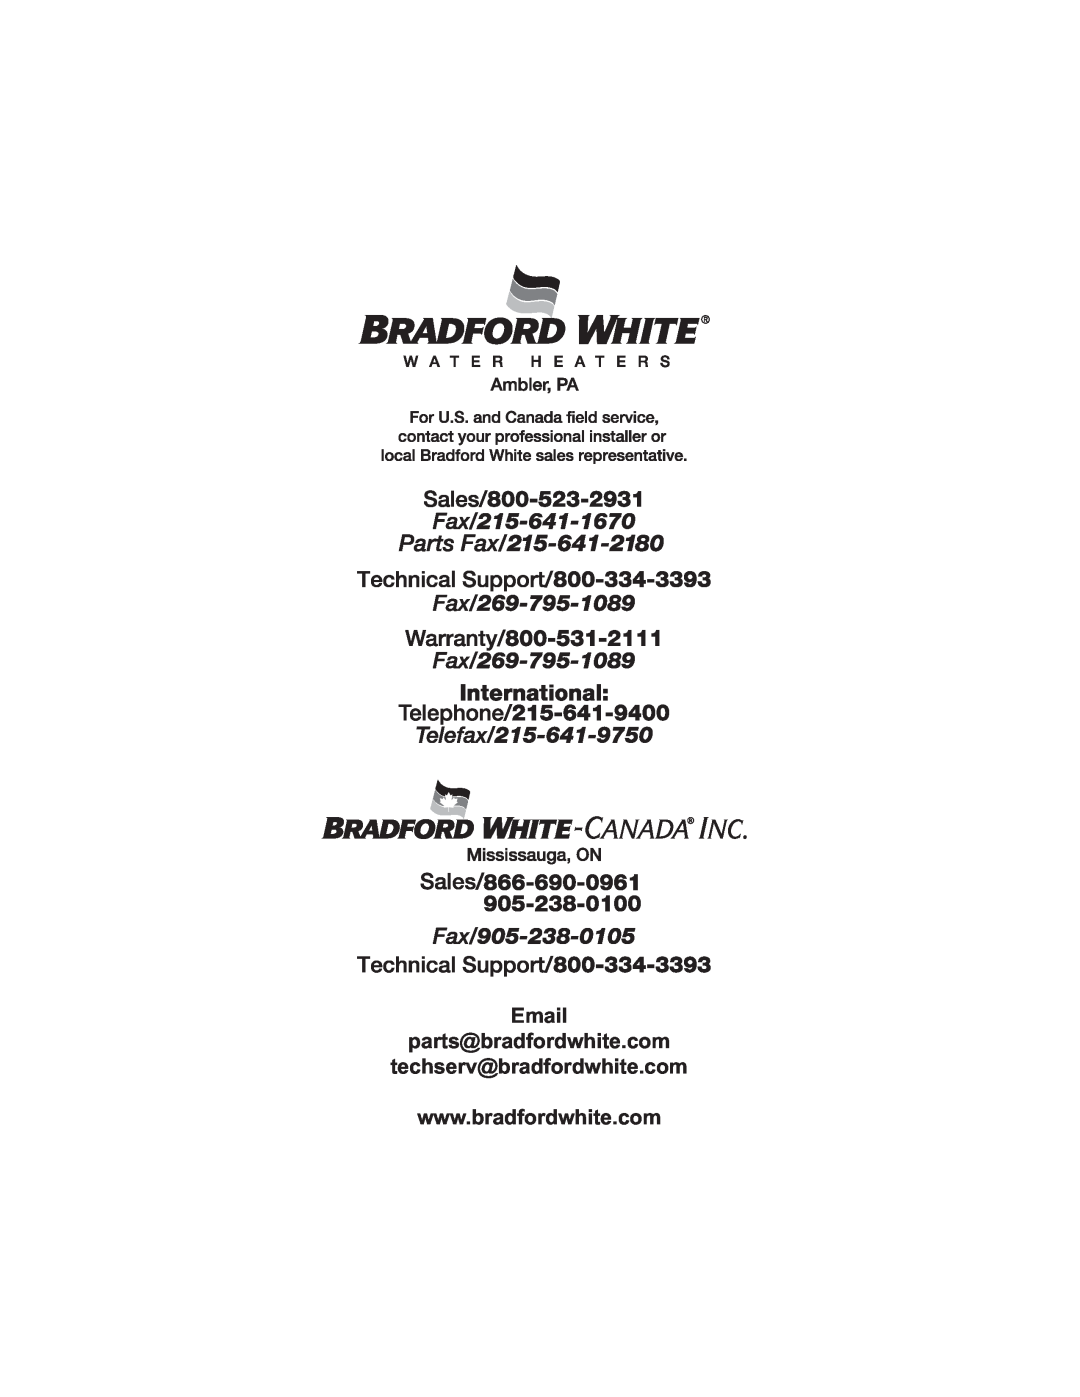 Bradford-White Corp U2TW65T*FRN, UTW450S60FR*N, UTW465S60FR*N Email parts@bradfordwhite.com techserv@bradfordwhite.com 